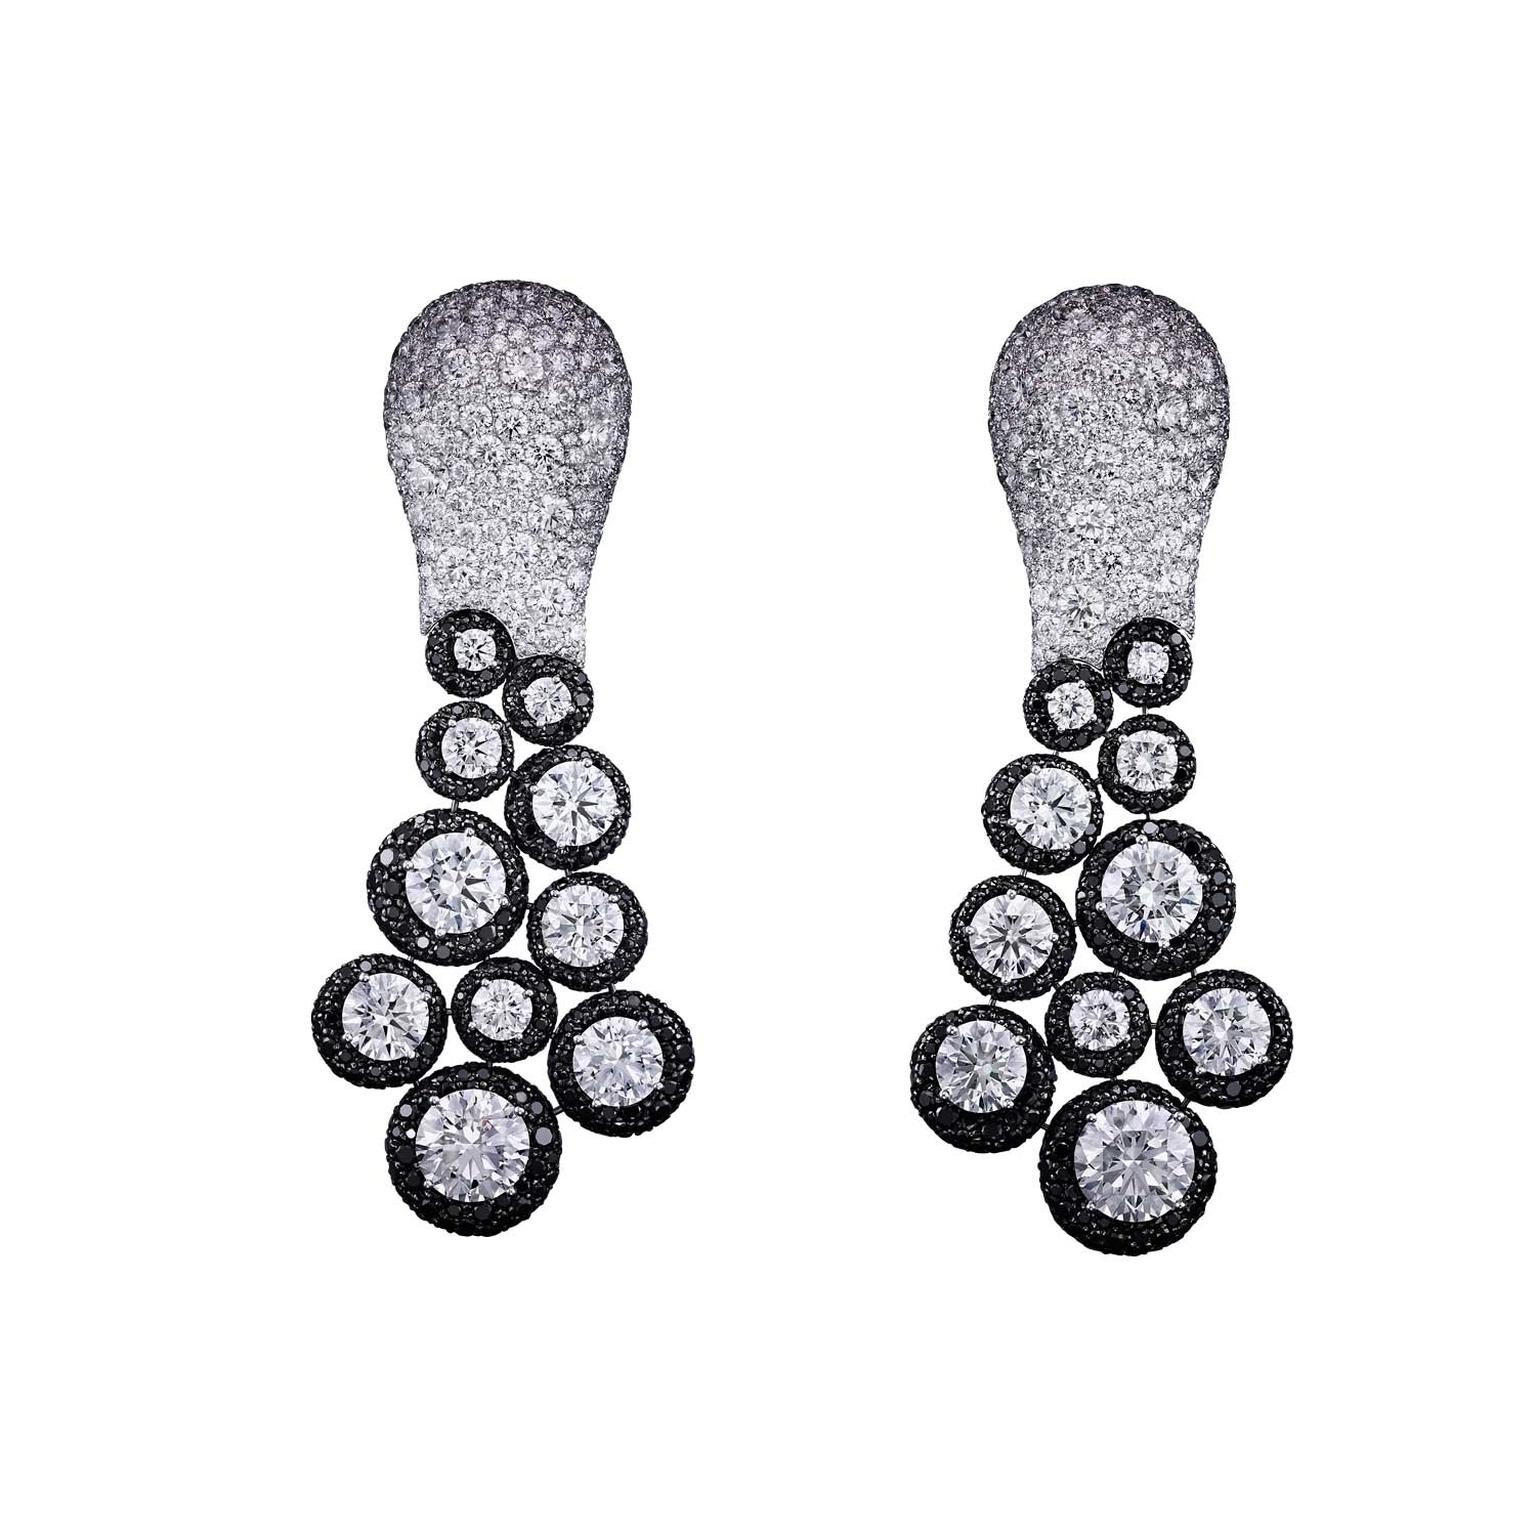 de Grisogono Folie white and black diamond earrings